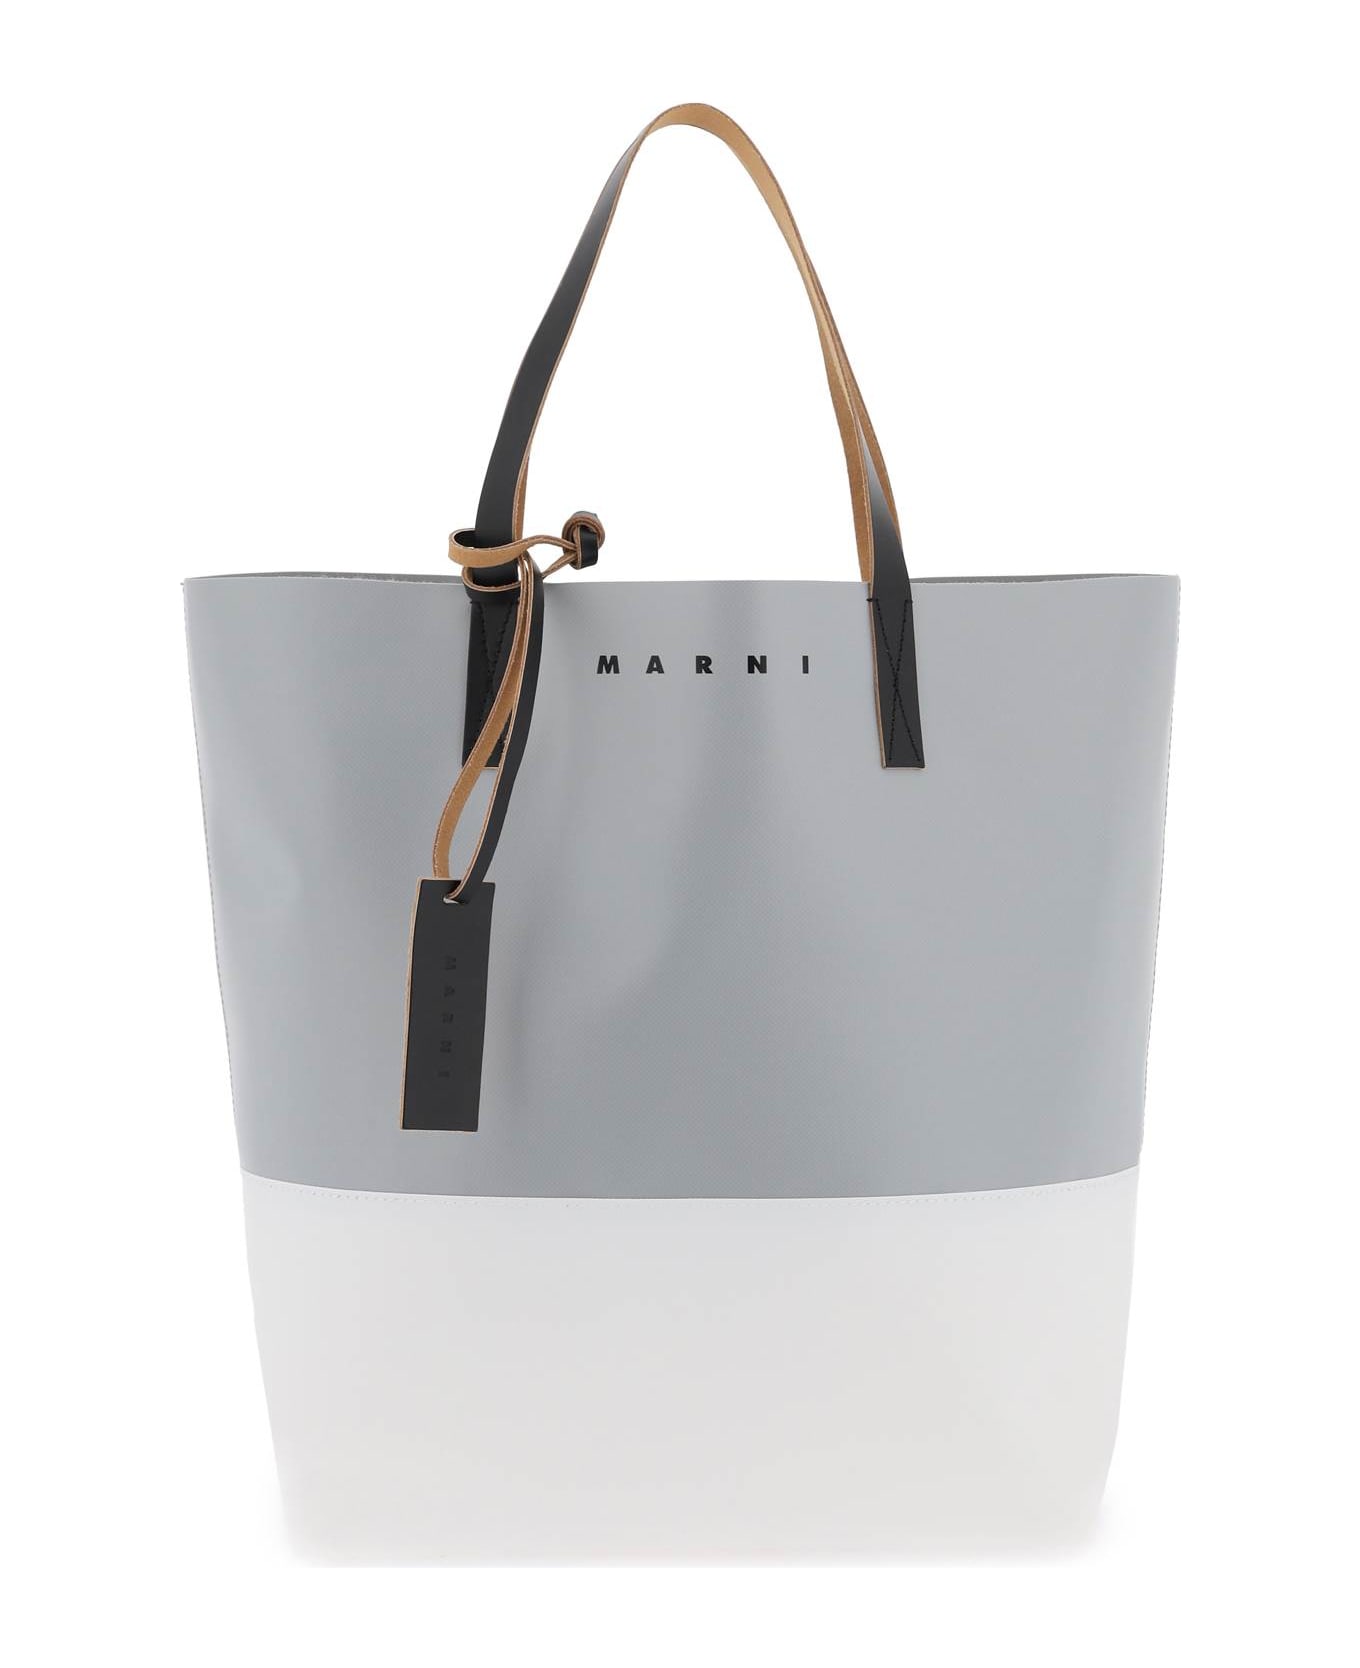 Marni Pvc Tribeca Shopping Bag - Grigio/argento トートバッグ